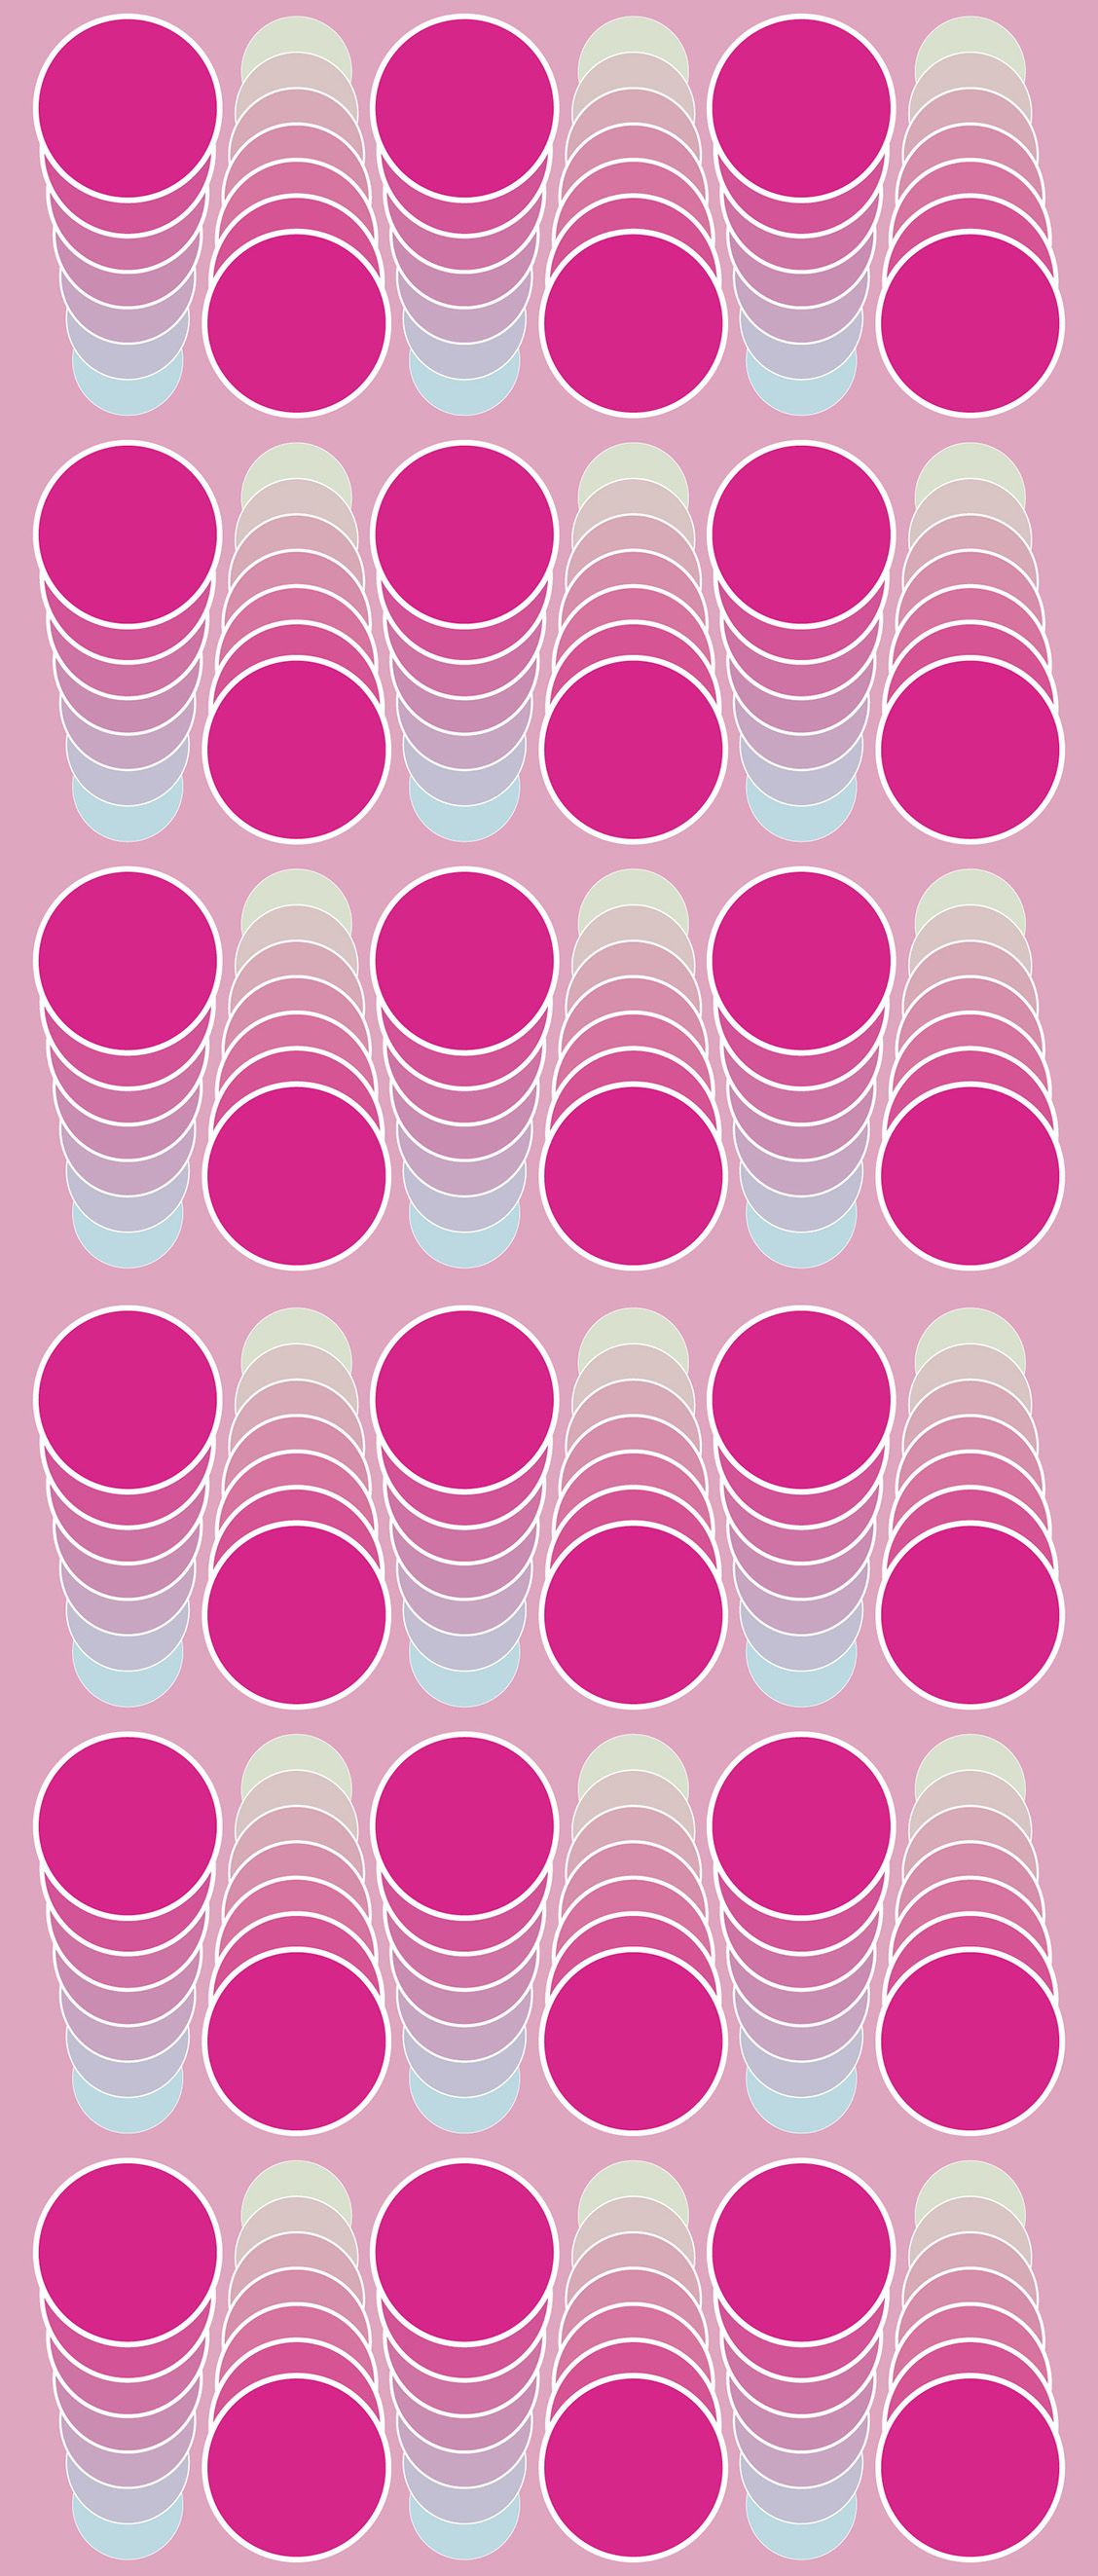 Pattern Design Karim Rashid - 1128x2646 Wallpaper 